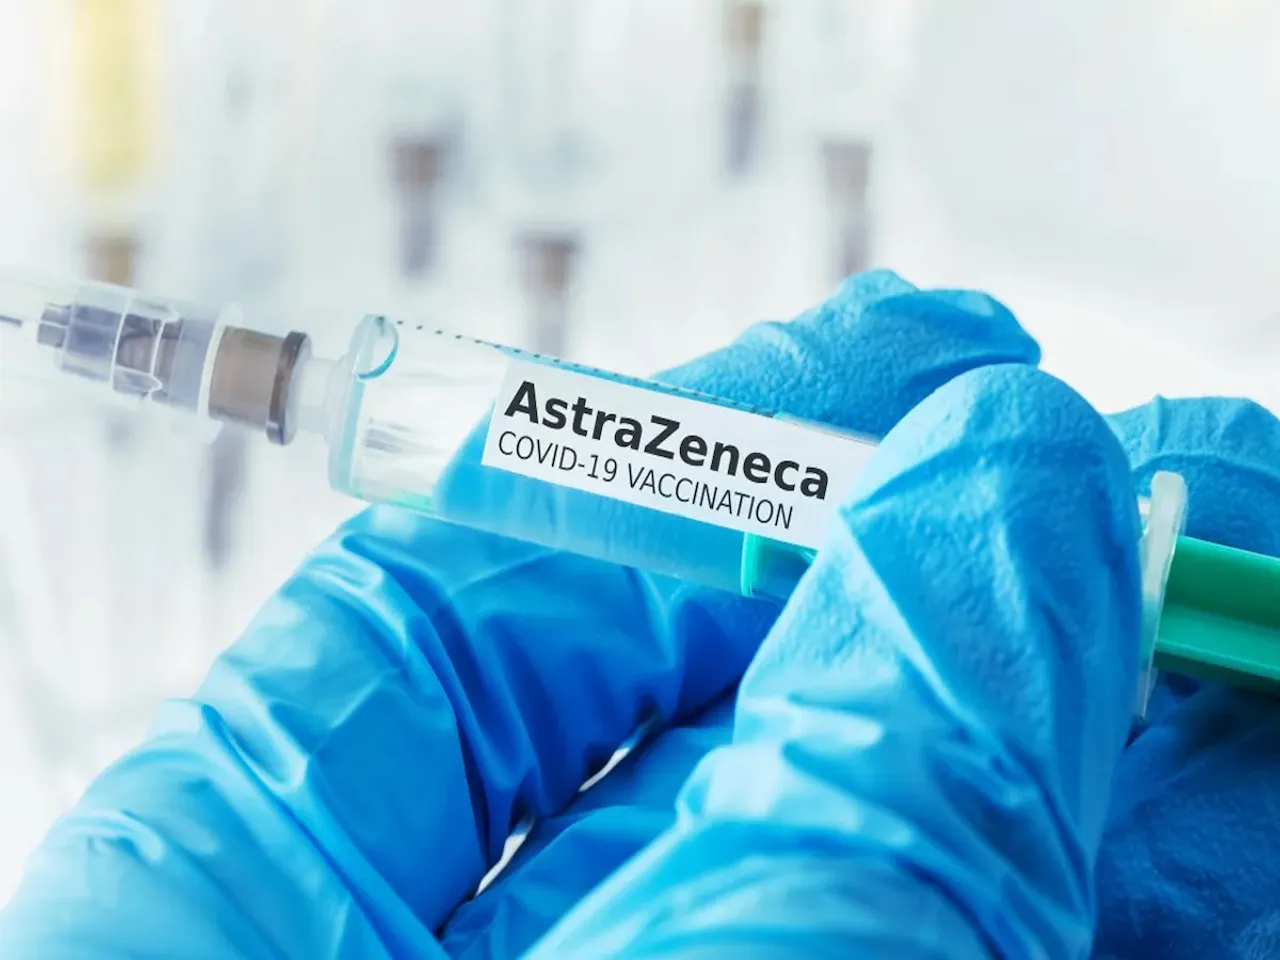 AstraZeneca Admits Covishield Causes Rare Blood Clot Disorder TTS: What Is It?